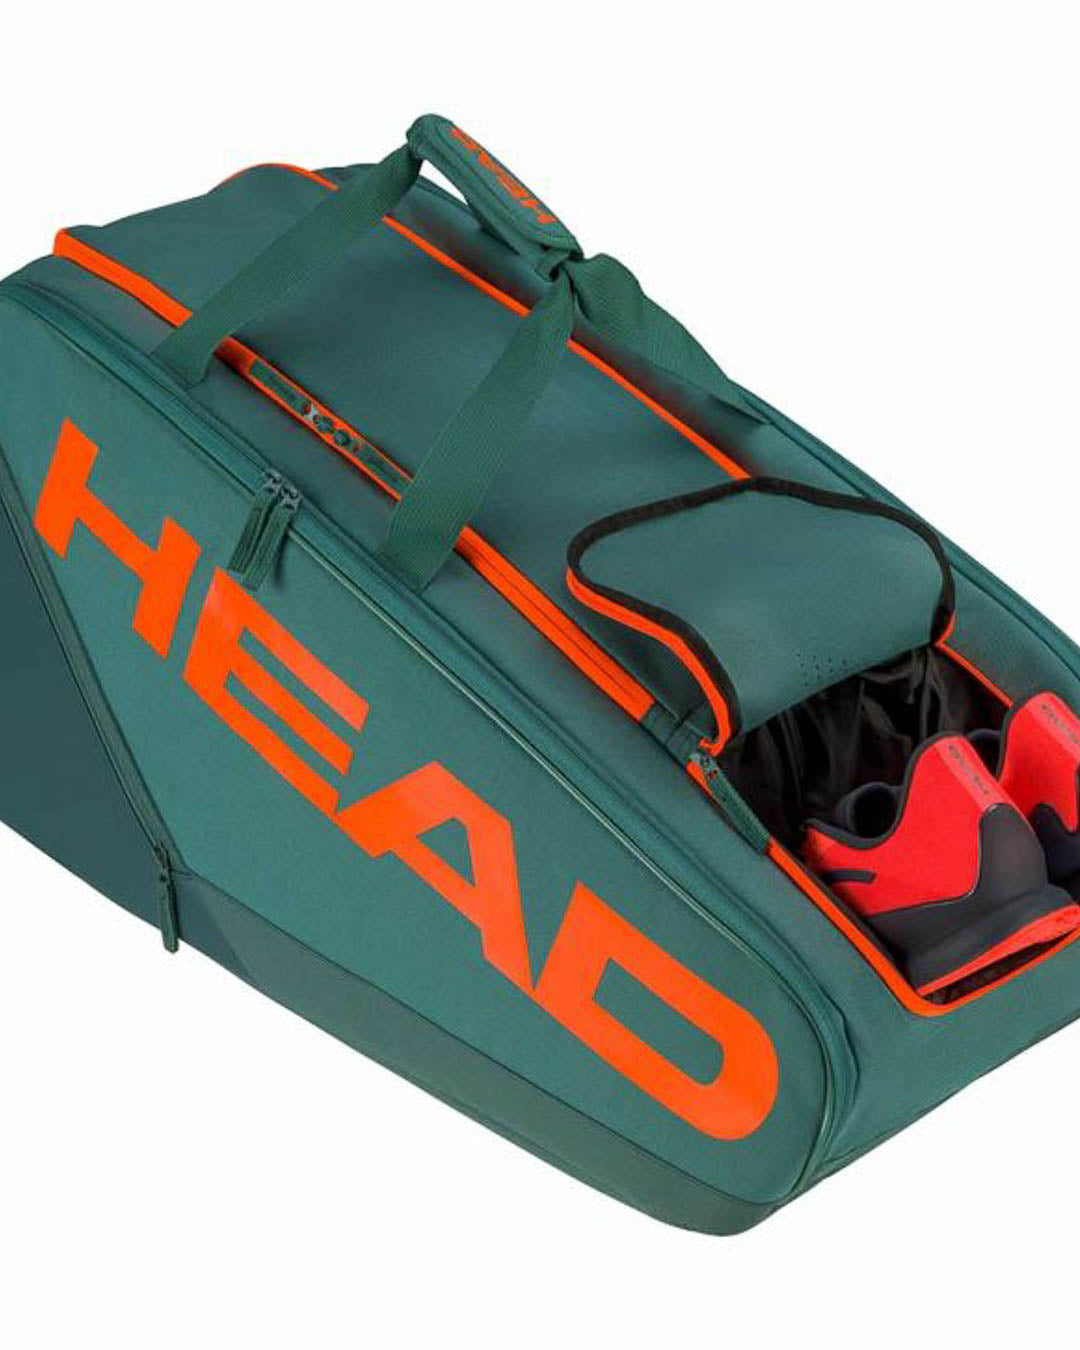 Head Radical Pro Racquet Bag L